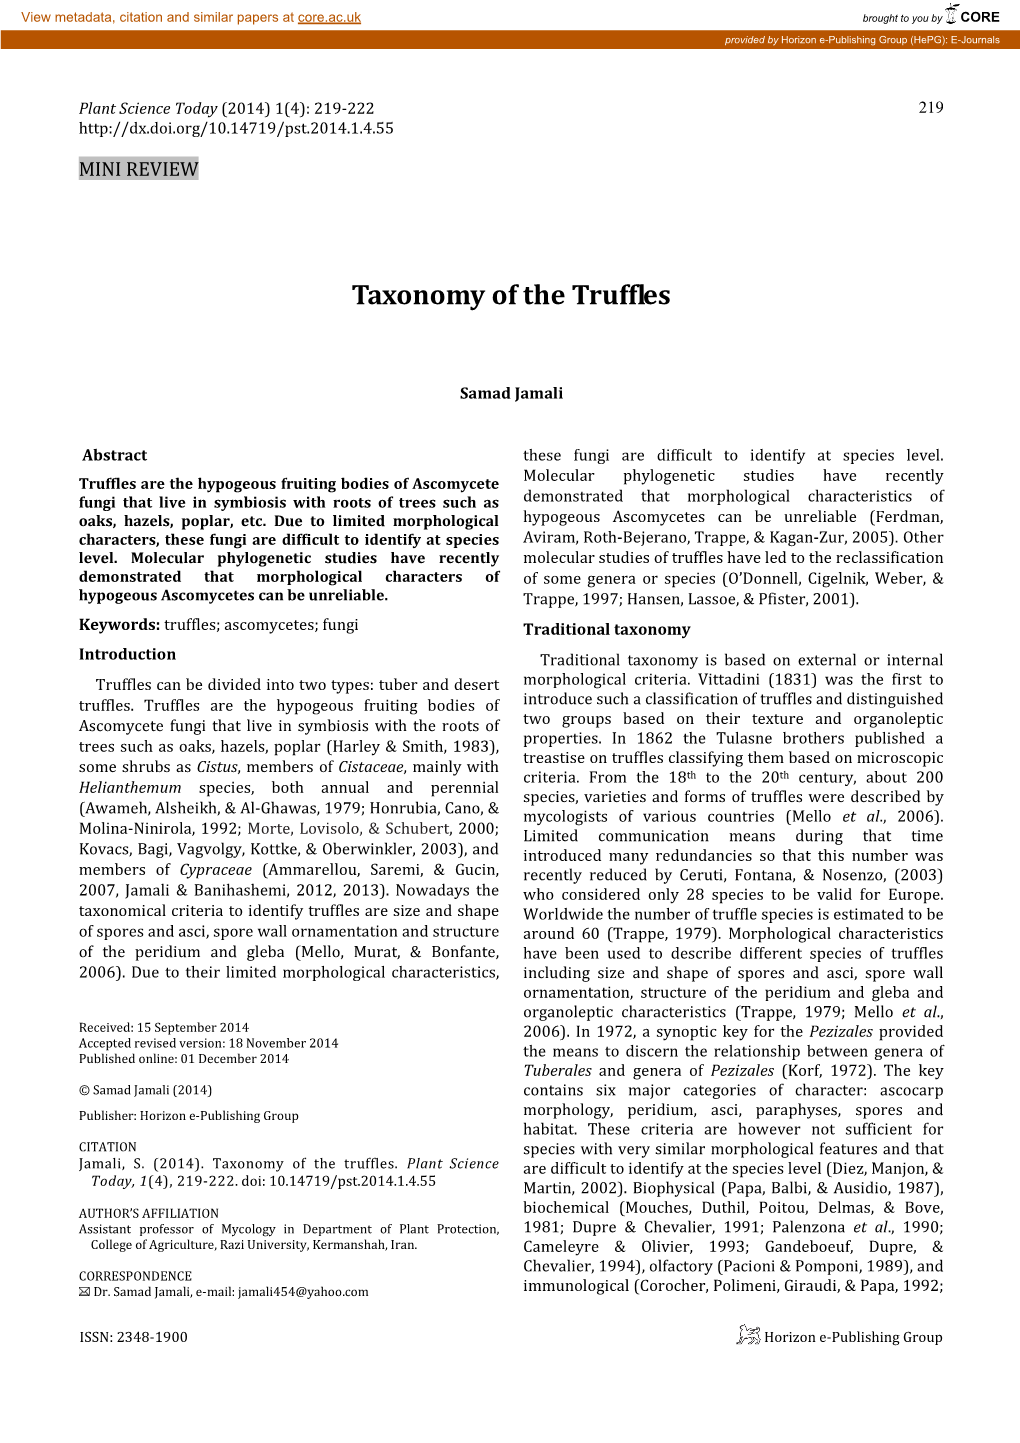 Taxonomy of the Truffles